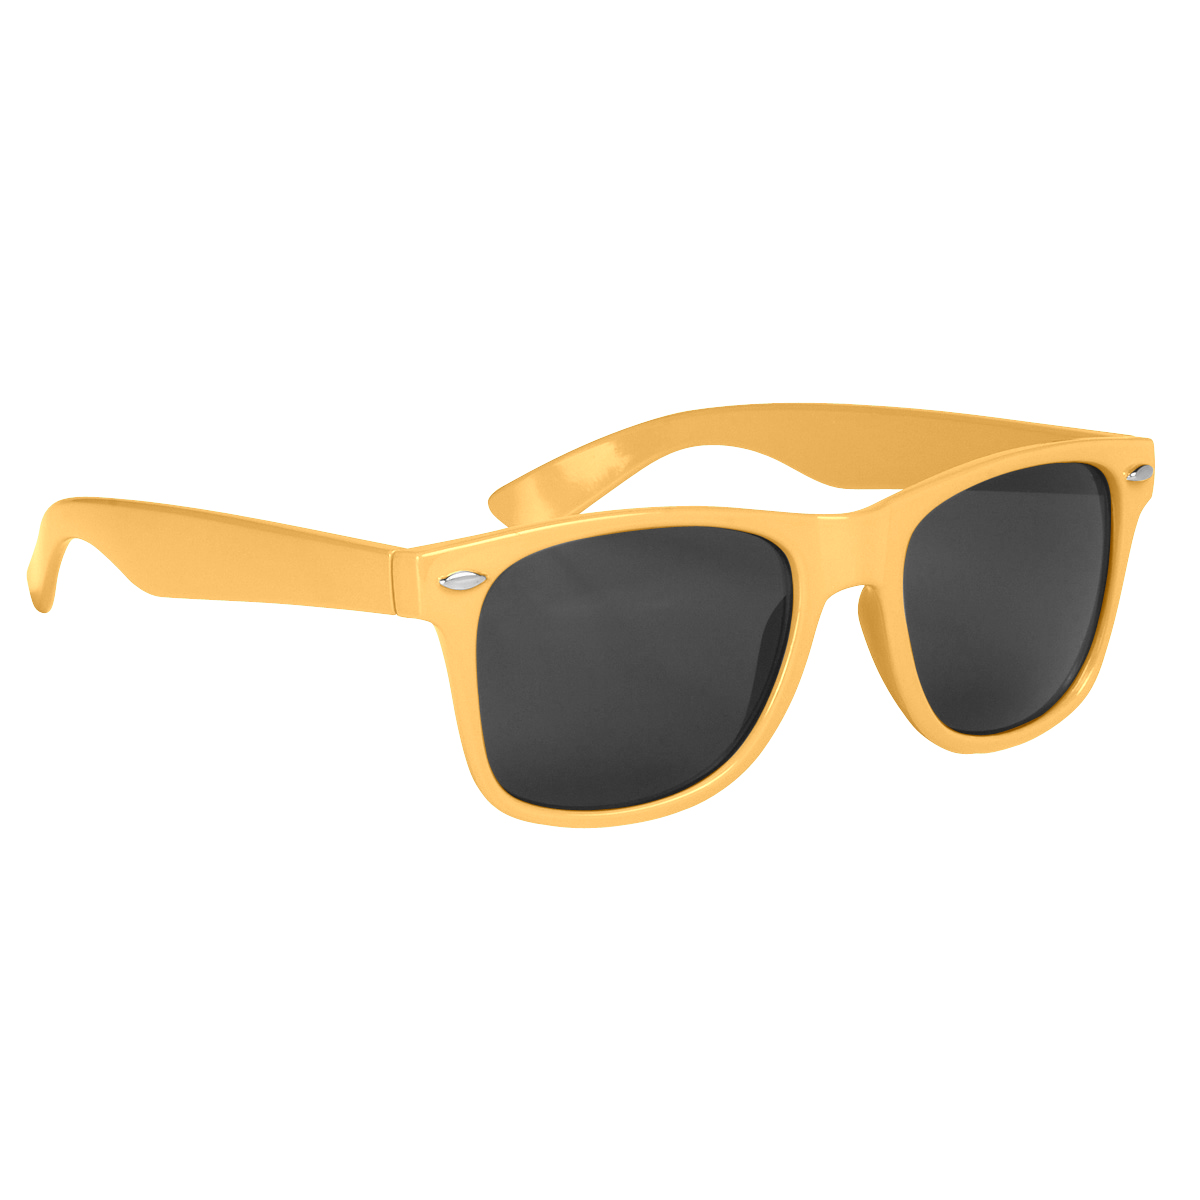 Athletic Gold Malibu Sunglasses